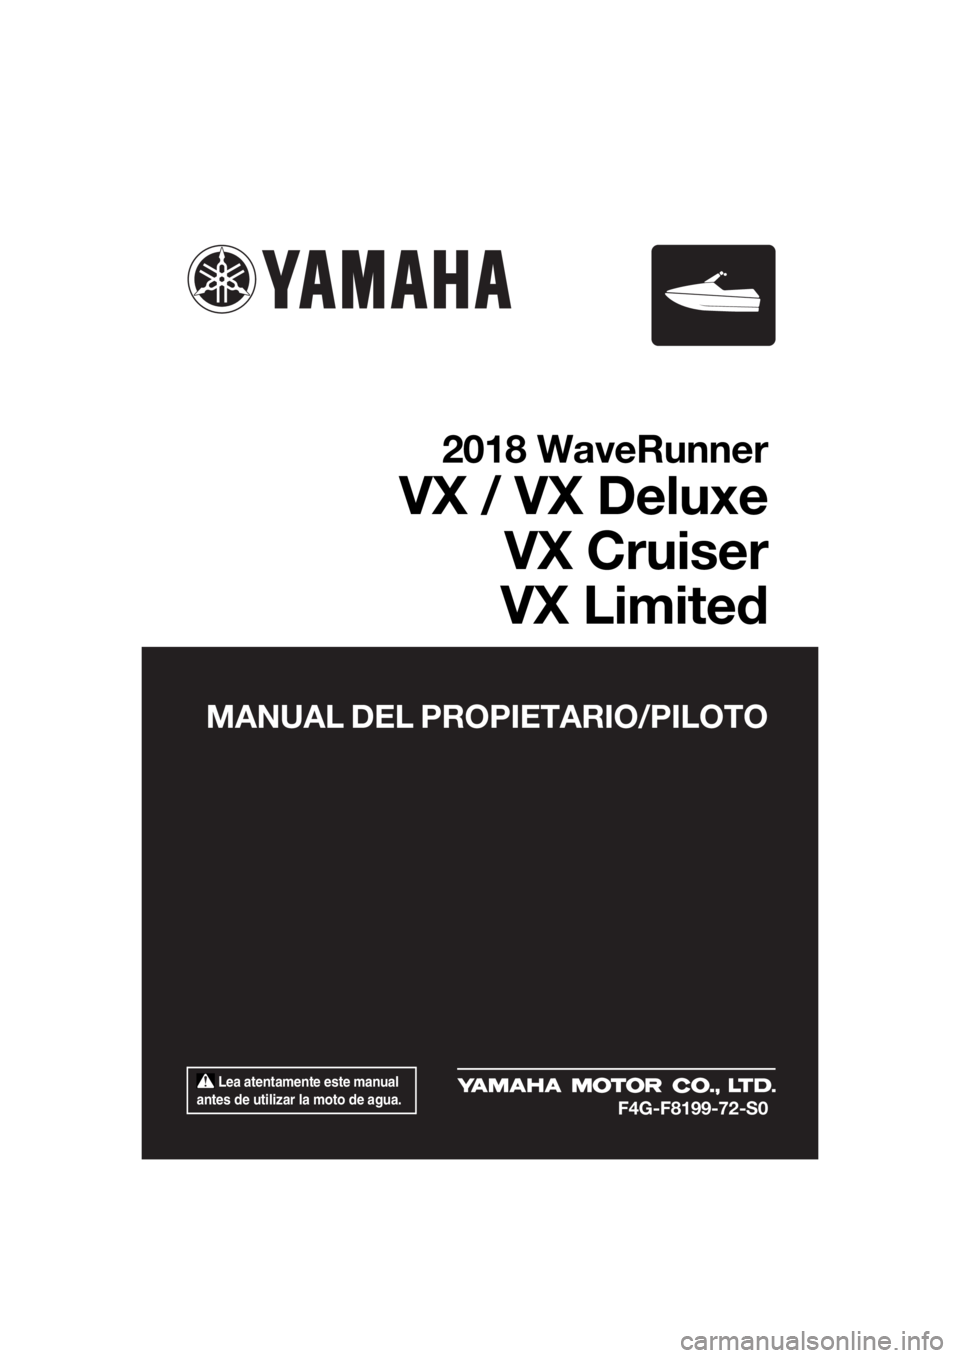 YAMAHA VX LIMITED 2018  Manuale de Empleo (in Spanish)  Lea atentamente este manual 
antes de utilizar la moto de agua.
MANUAL DEL PROPIETARIO/PILOTO
2018 WaveRunner
VX / VX Deluxe
VX Cruiser
VX Limited
F4G-F8199-72-S0
UF4G72S0.book  Page 1  Monday, July 